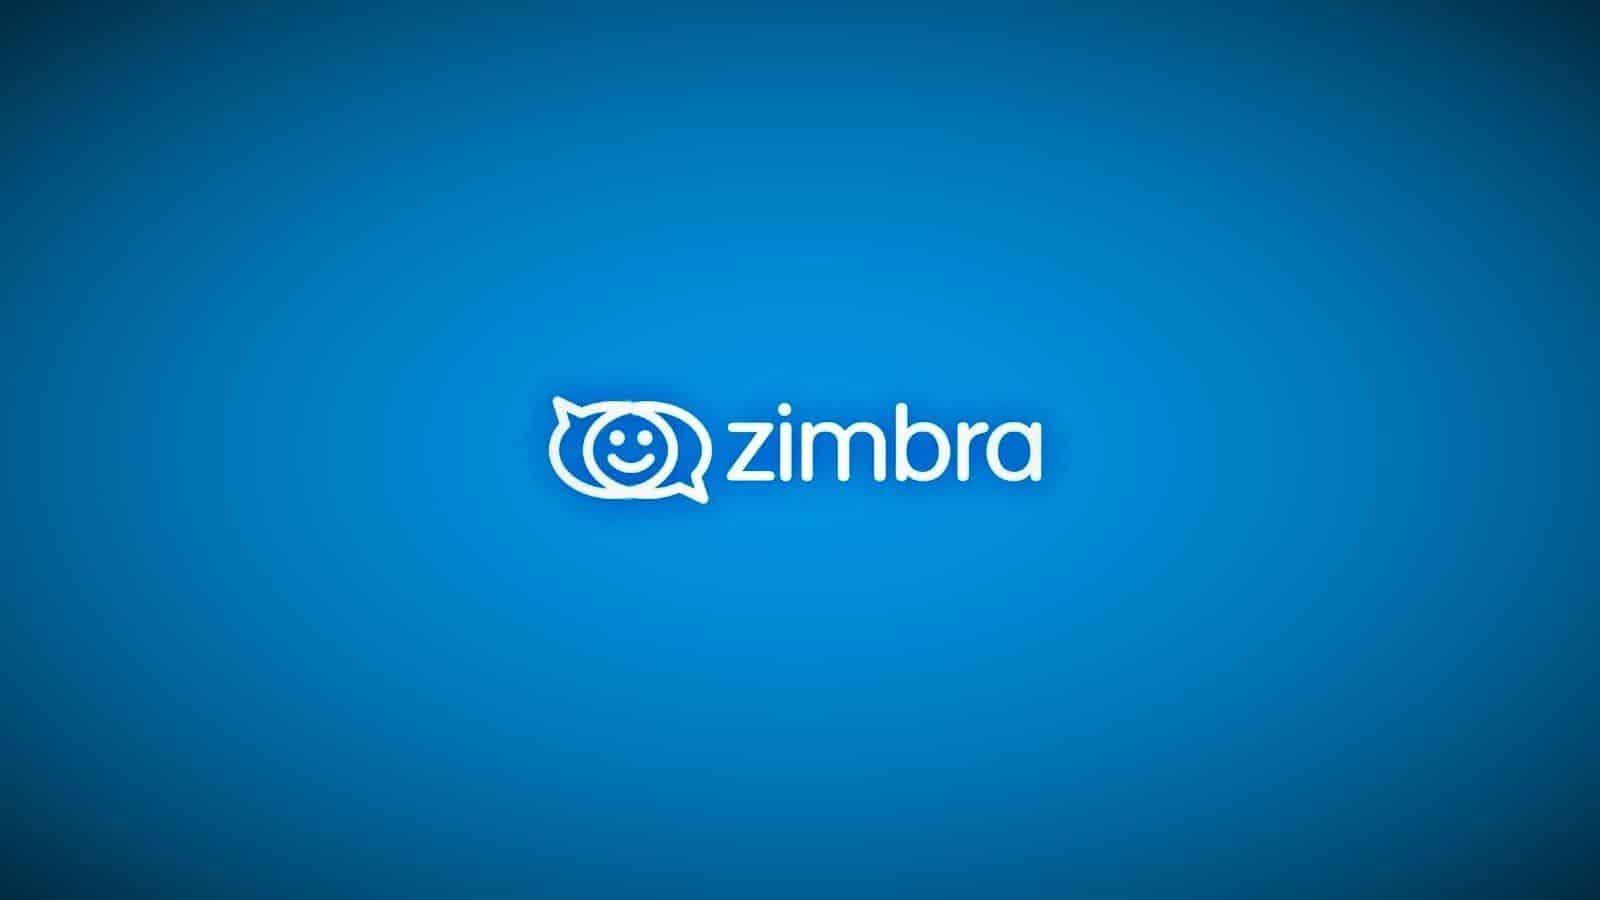 Zimbra urges admins to manually fix zero-day exploited in attacks